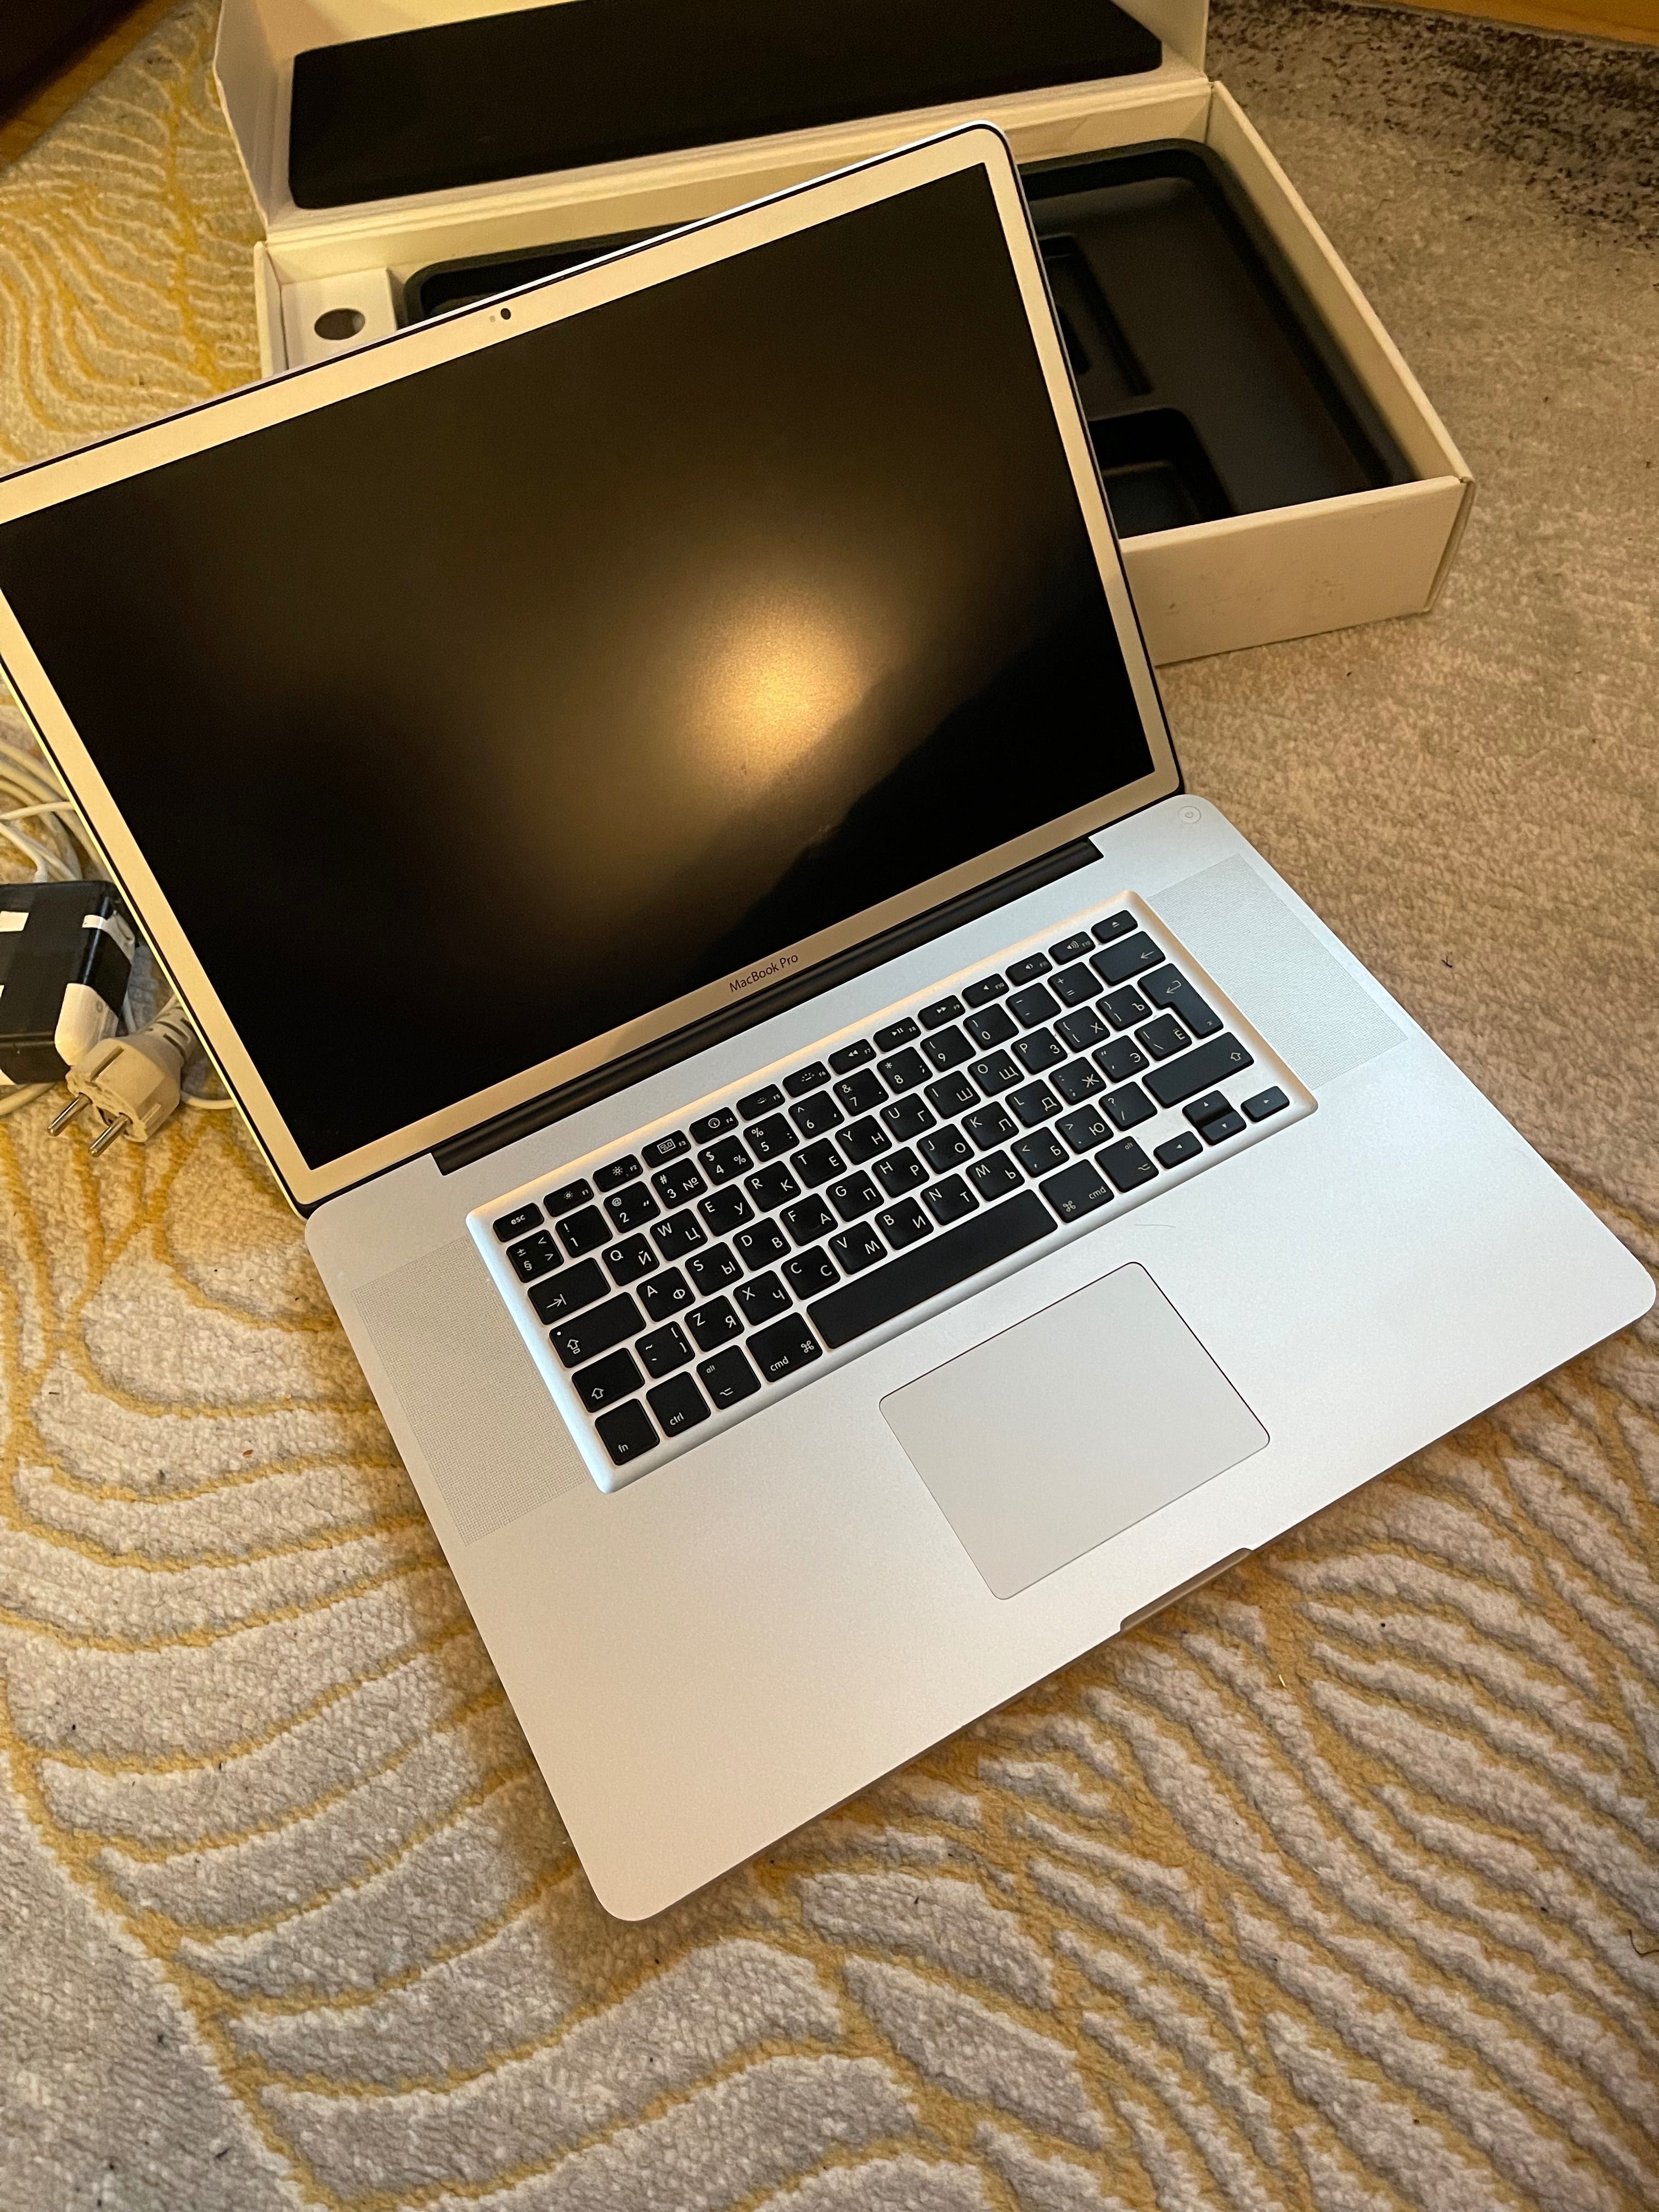 Macbook pro 17 inch Mid 2010